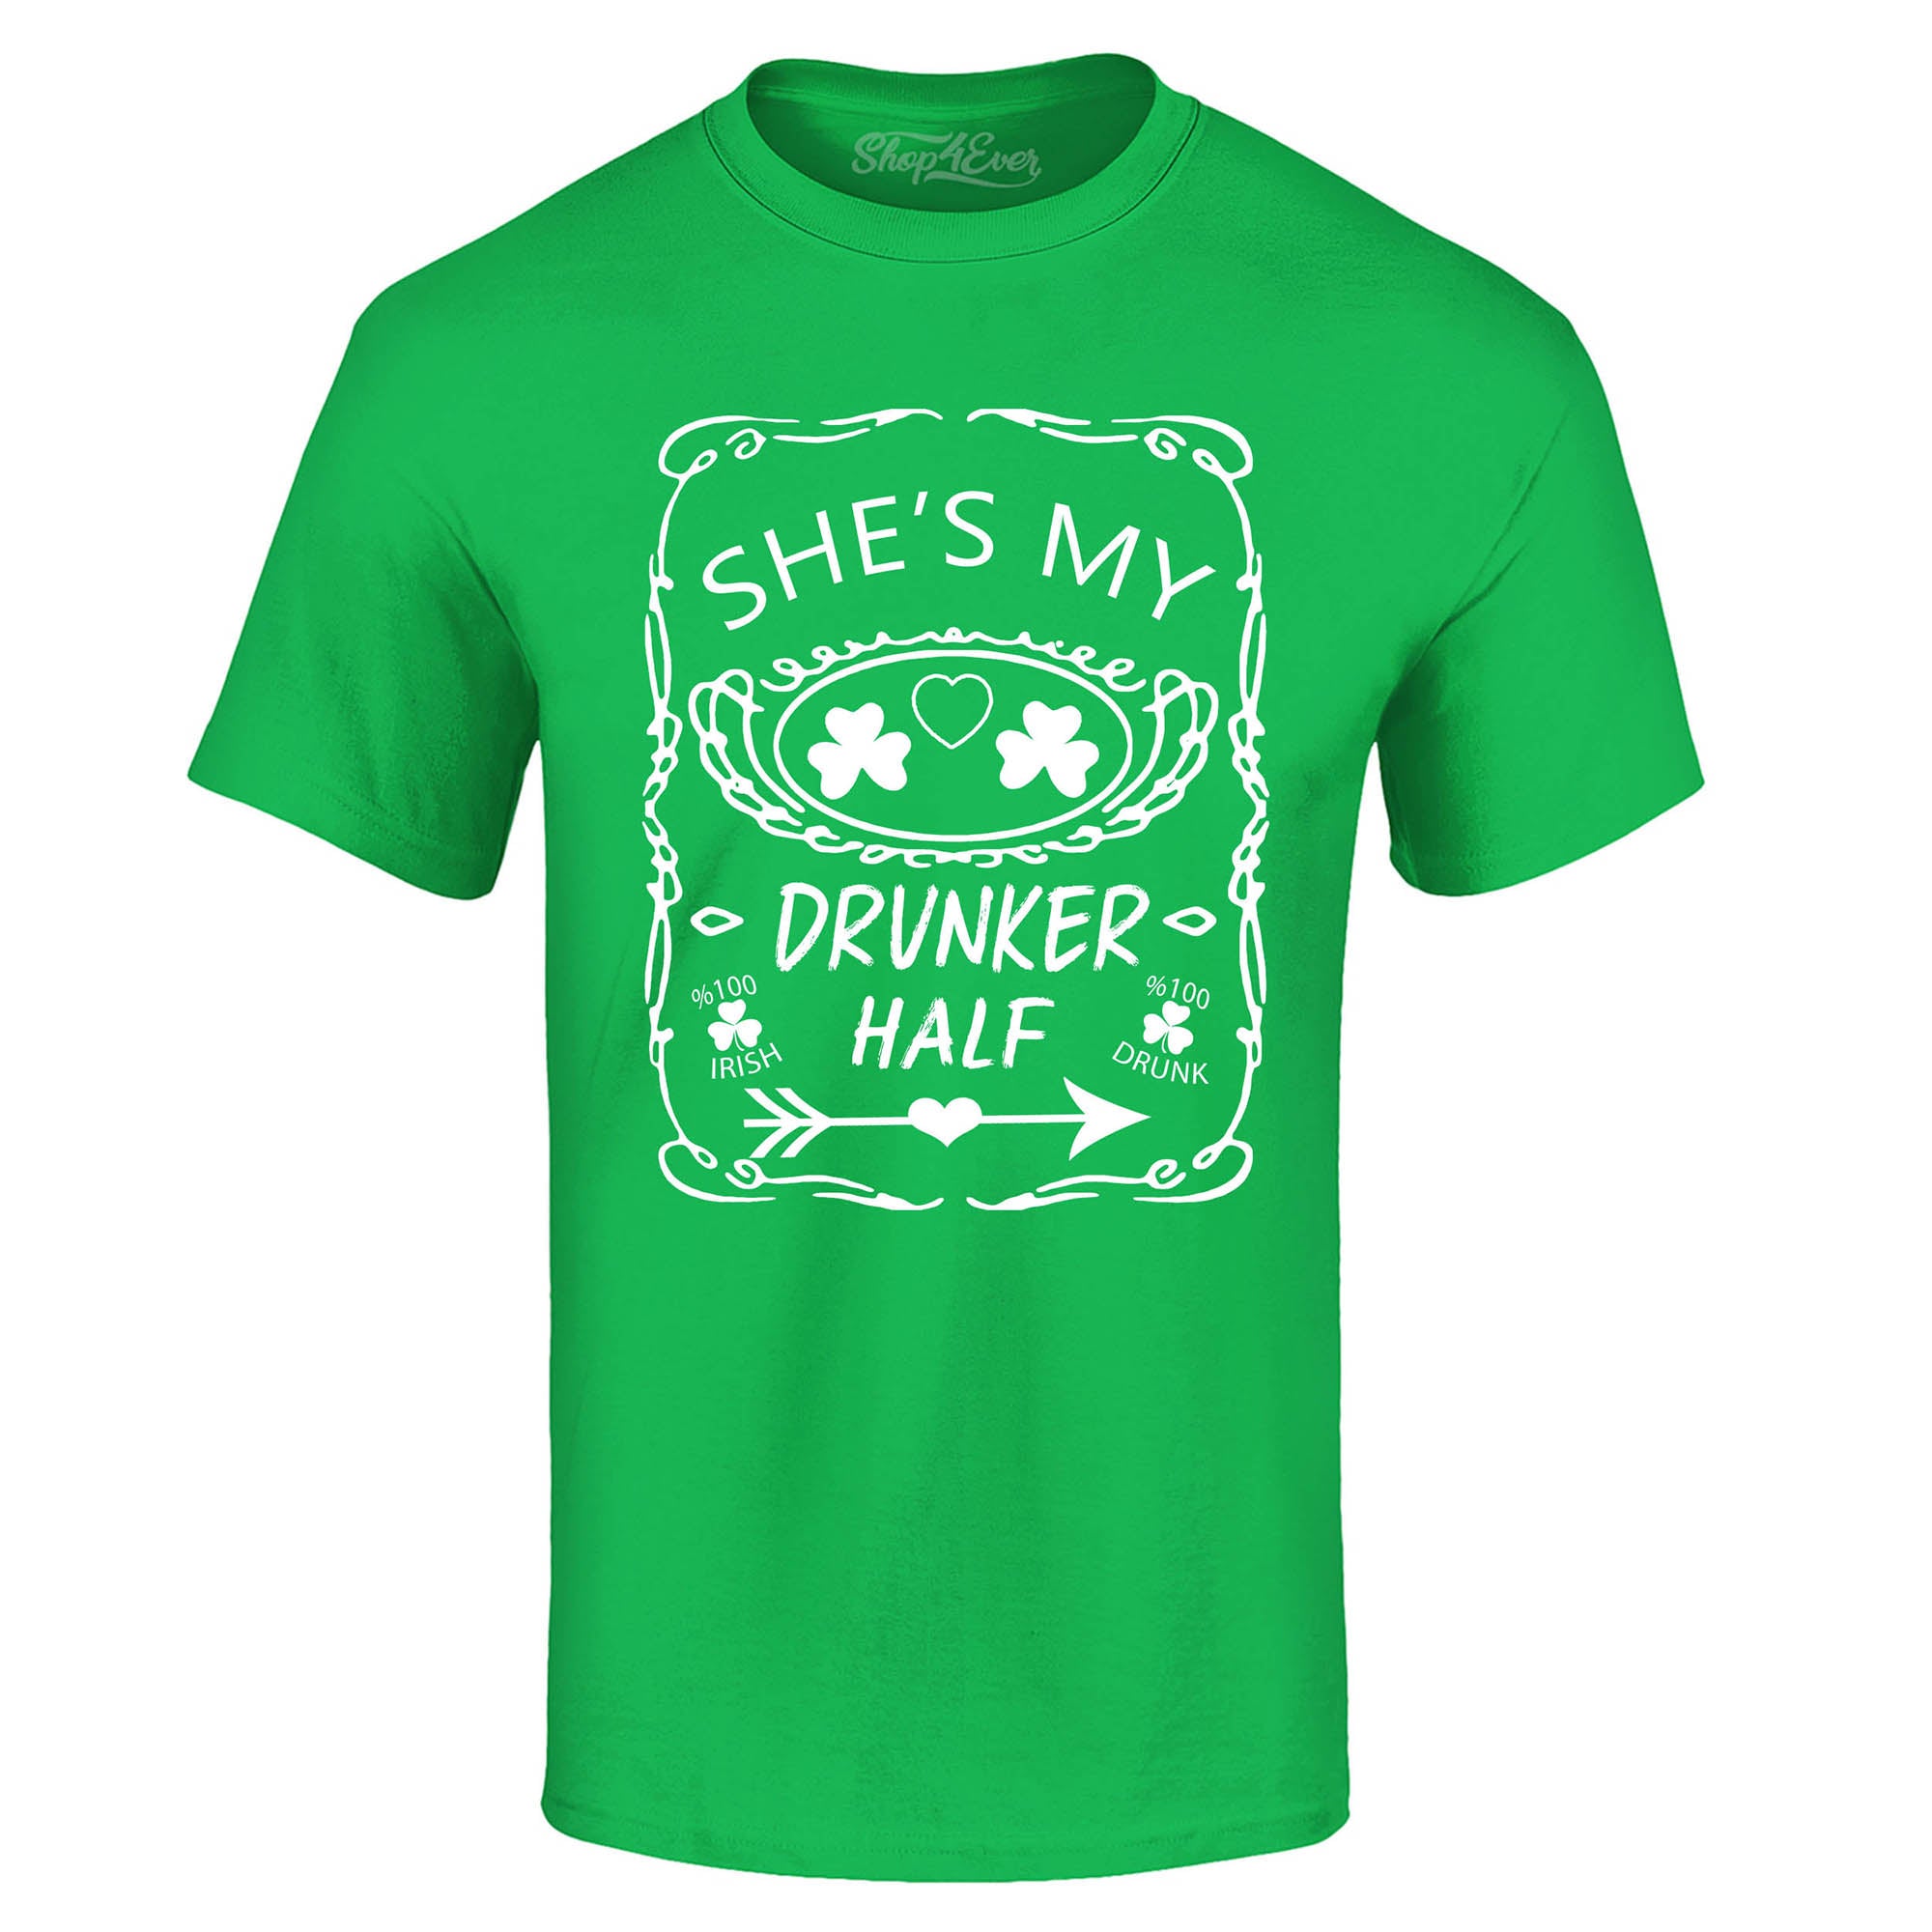 She's My Drunker Half ~ St. Patrick's Day T-Shirt